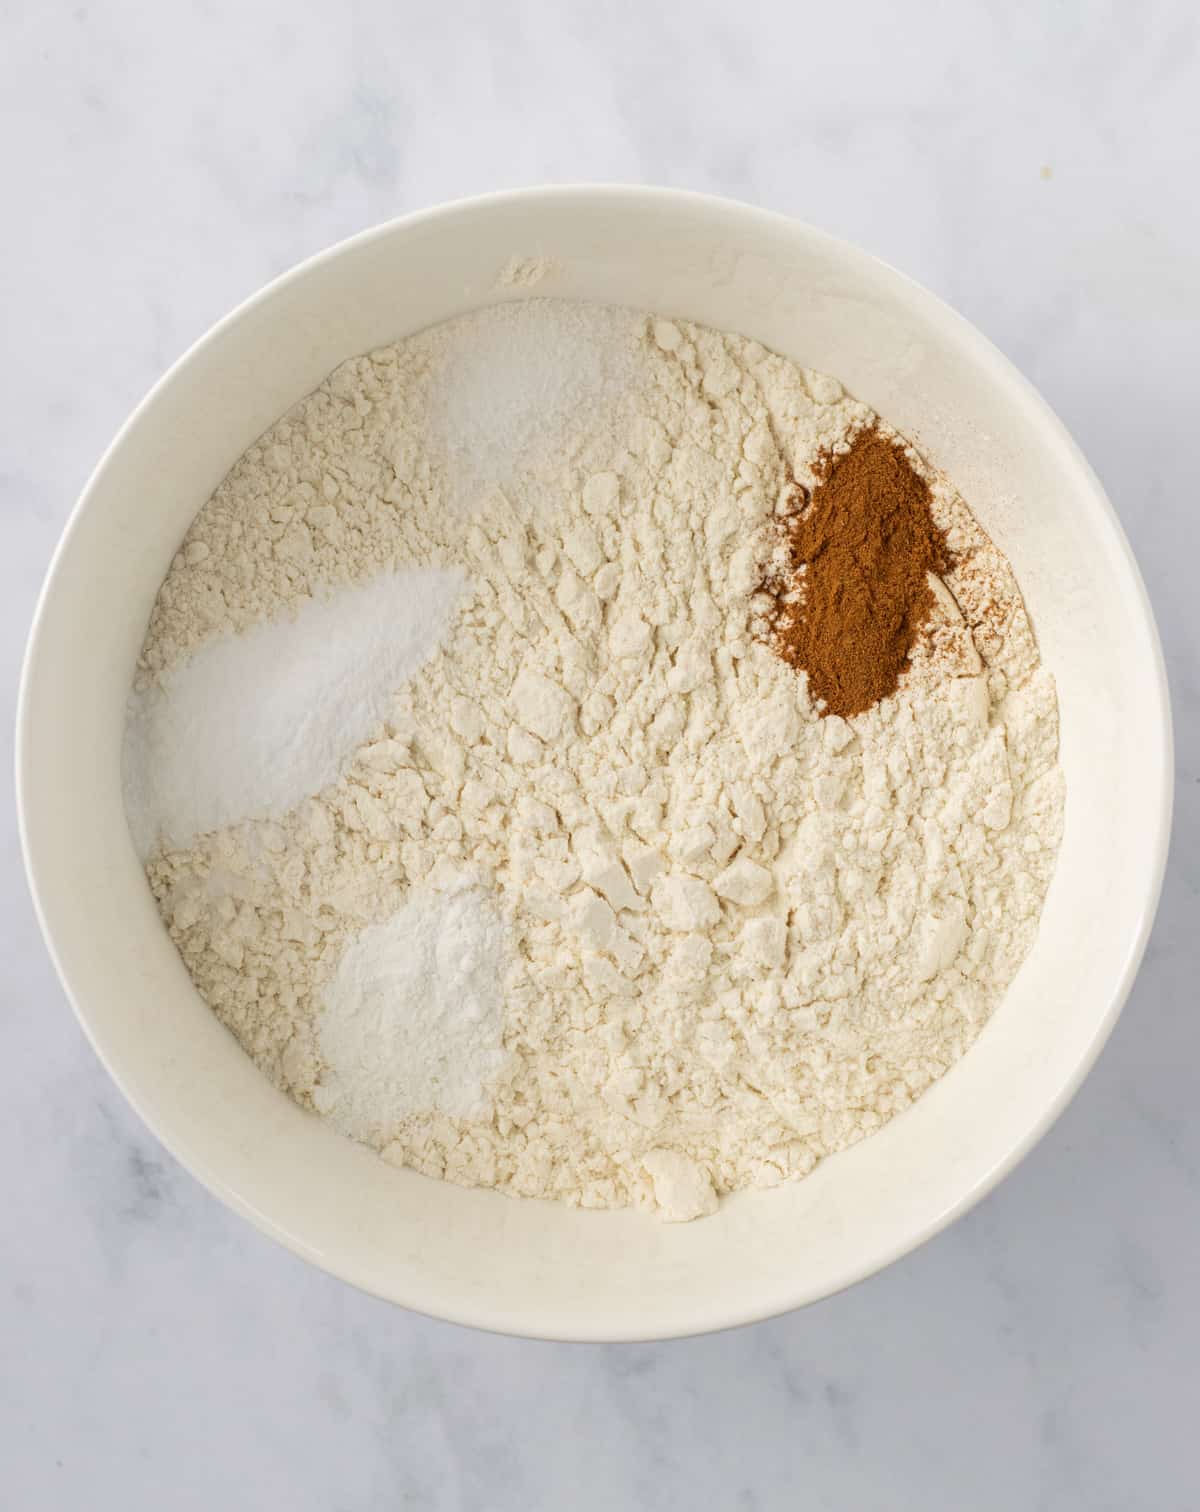 Flour, baking soda, baking powder, salt, and cinnamon in a bowl.